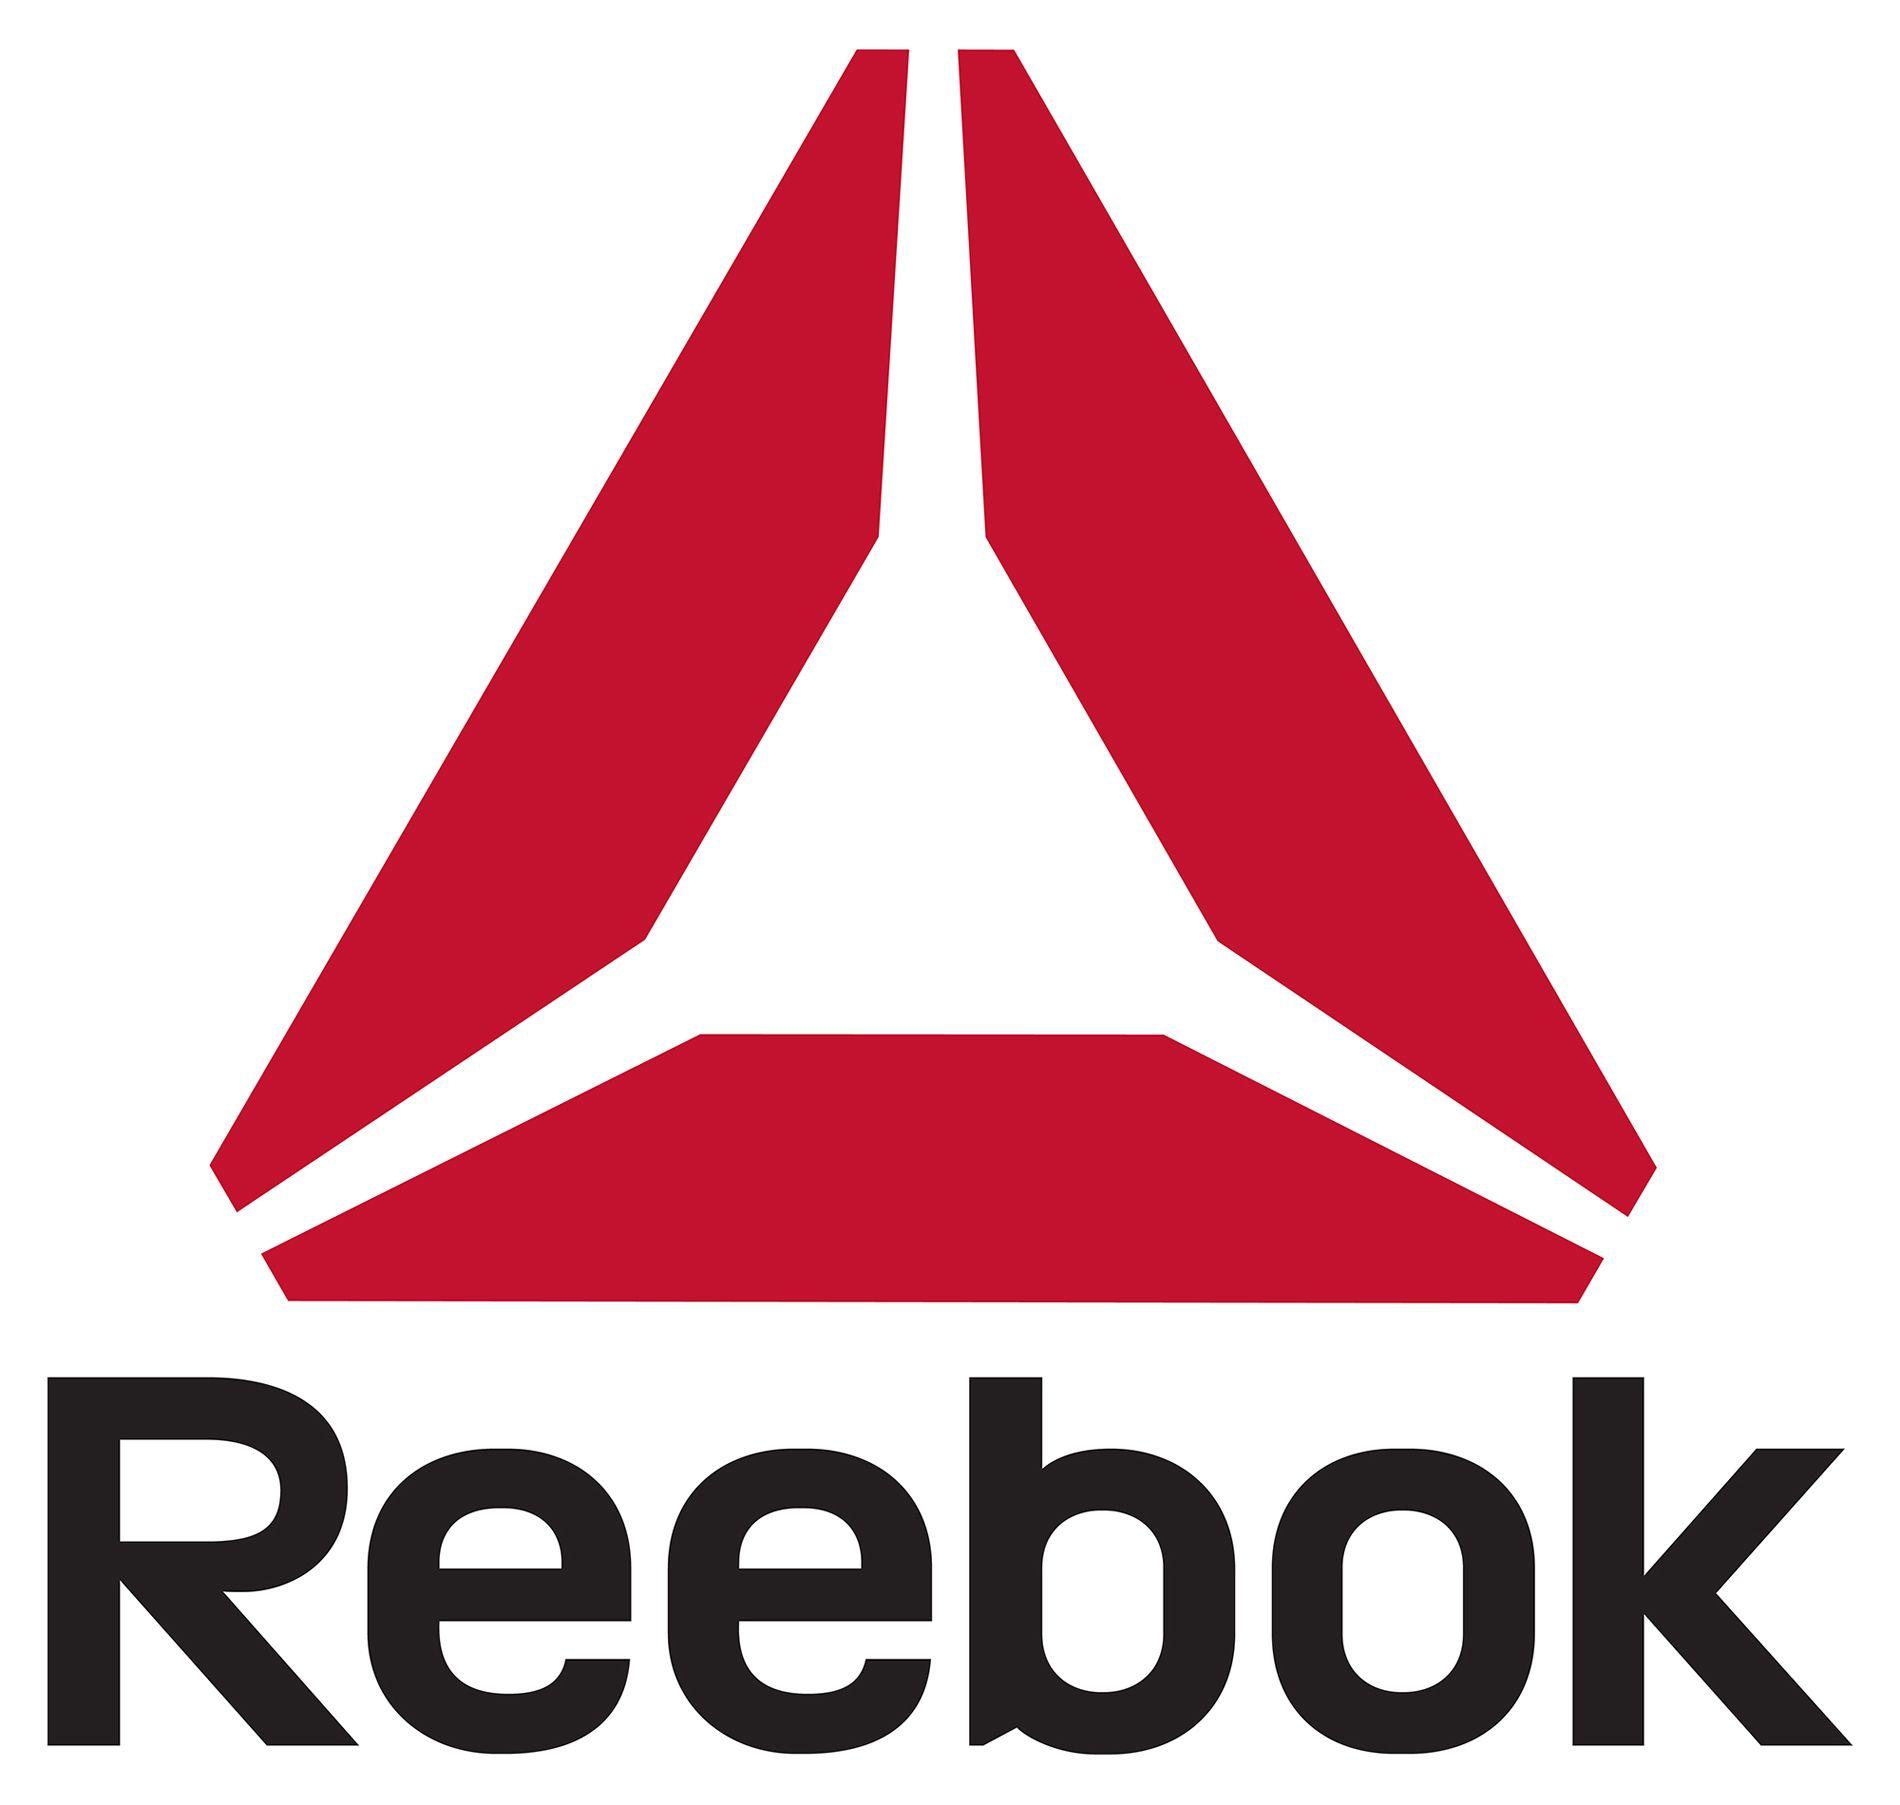 Reebok Logo - Reebok Logo, symbol, meaning, History and Evolution